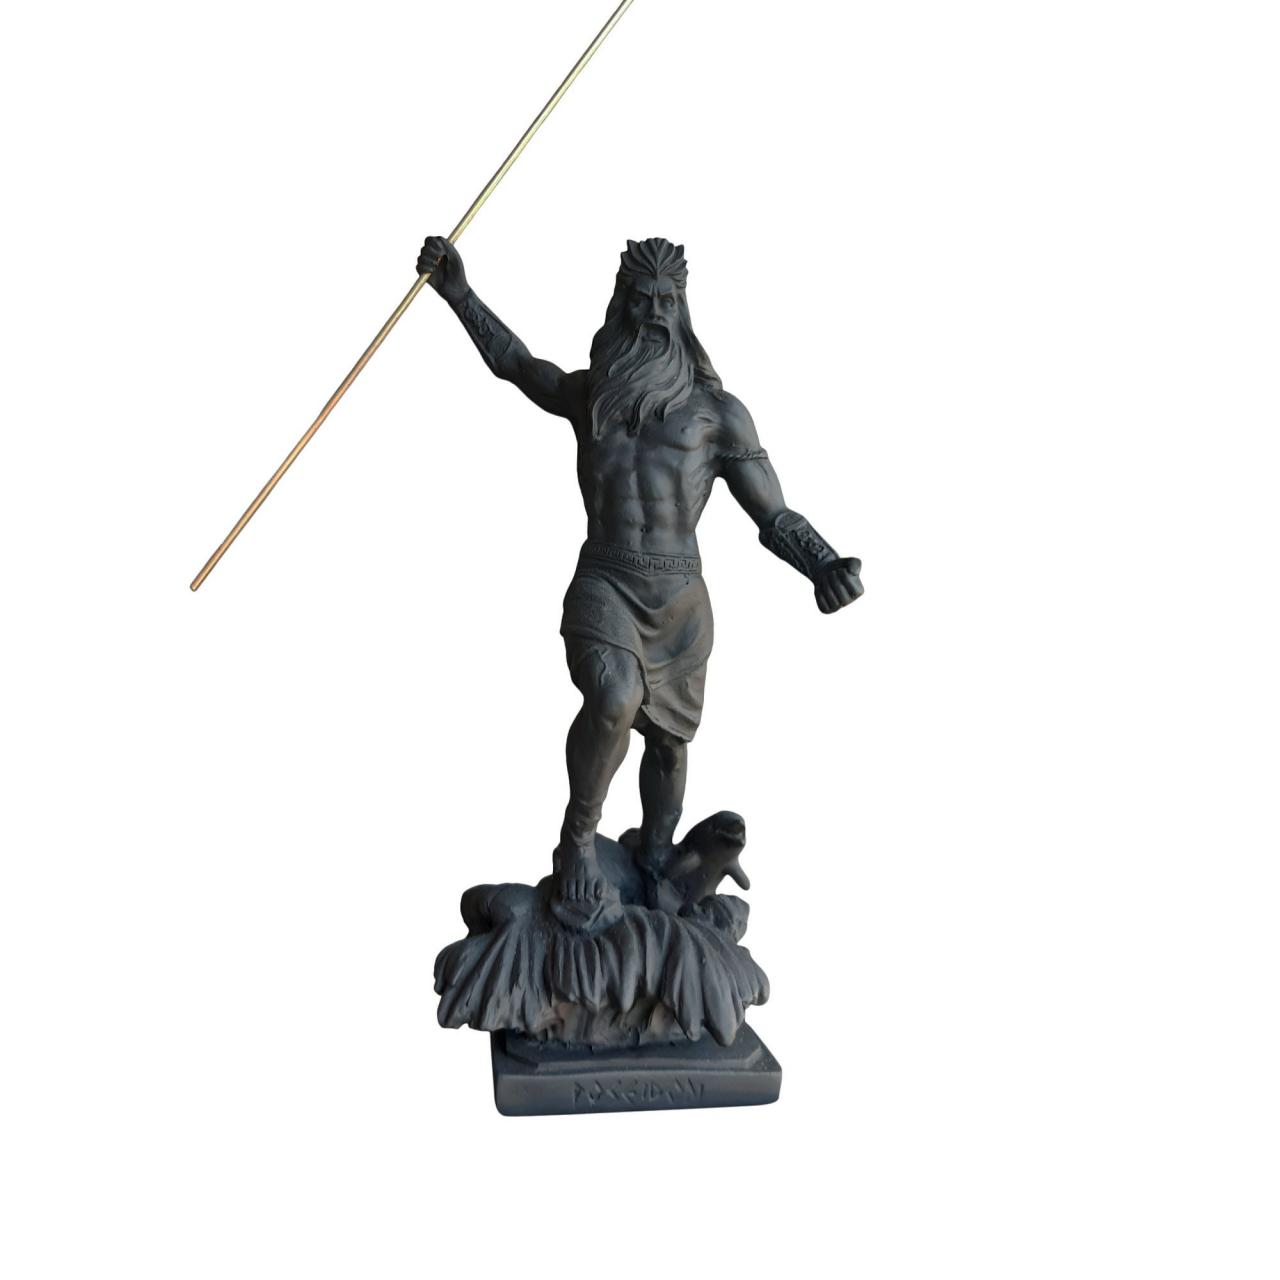 Poseidon Neptune Sculpture Greek Roman Mythology God Marble Handmade Figurine Classical Craft Statue 20cm - 7.87 Inches